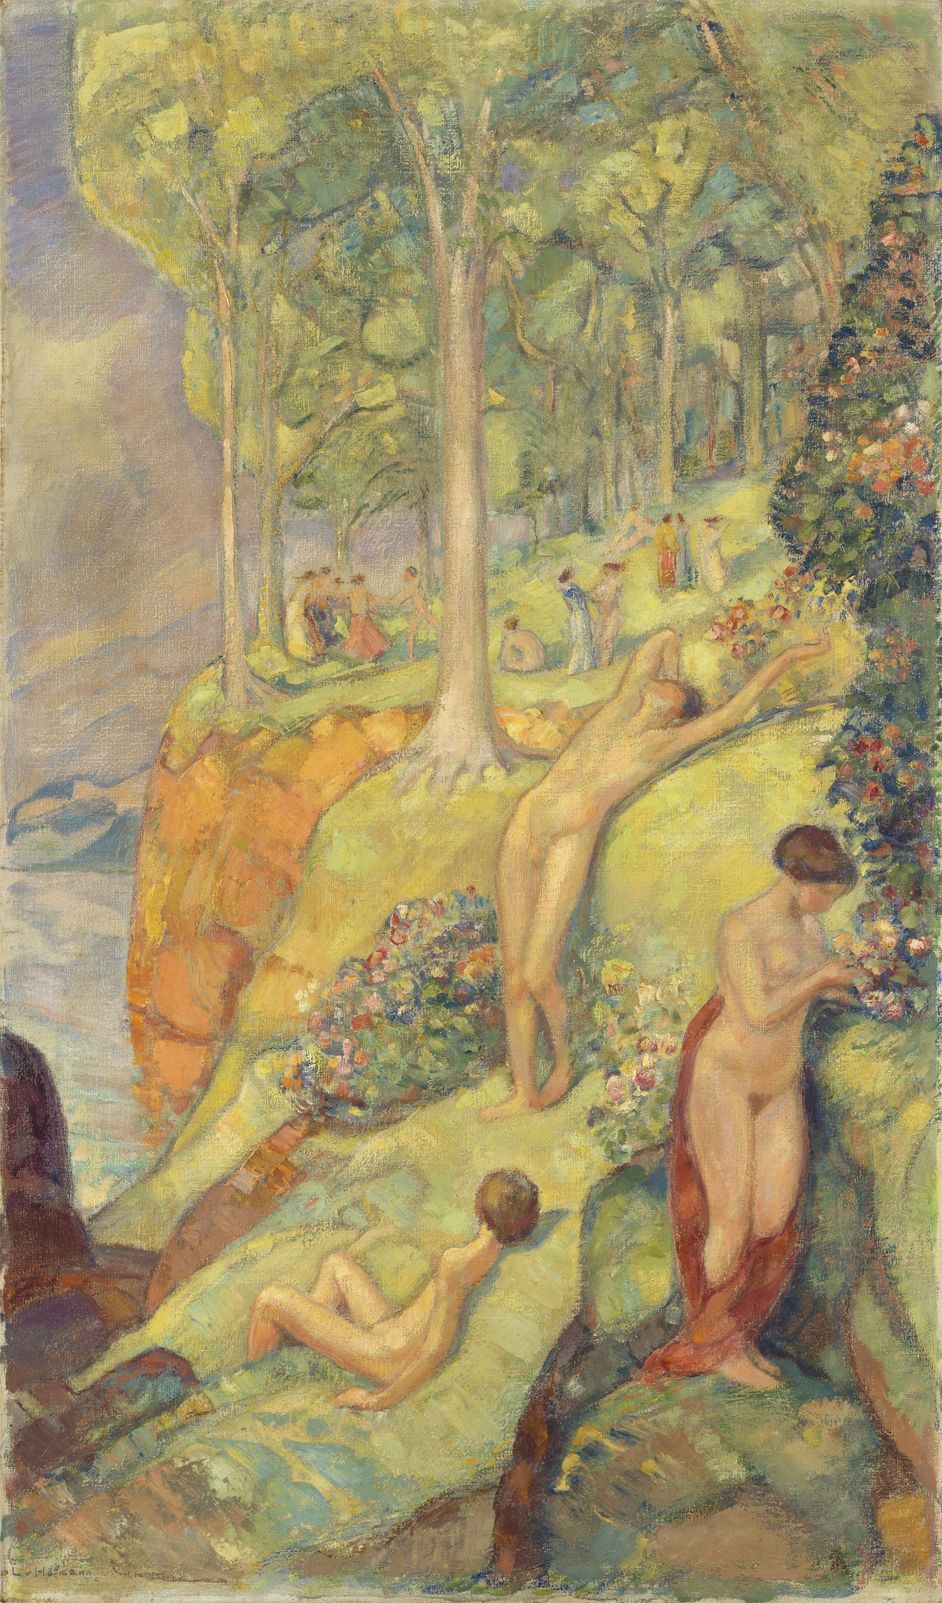 Oil on canvas, 146 × 86 cm